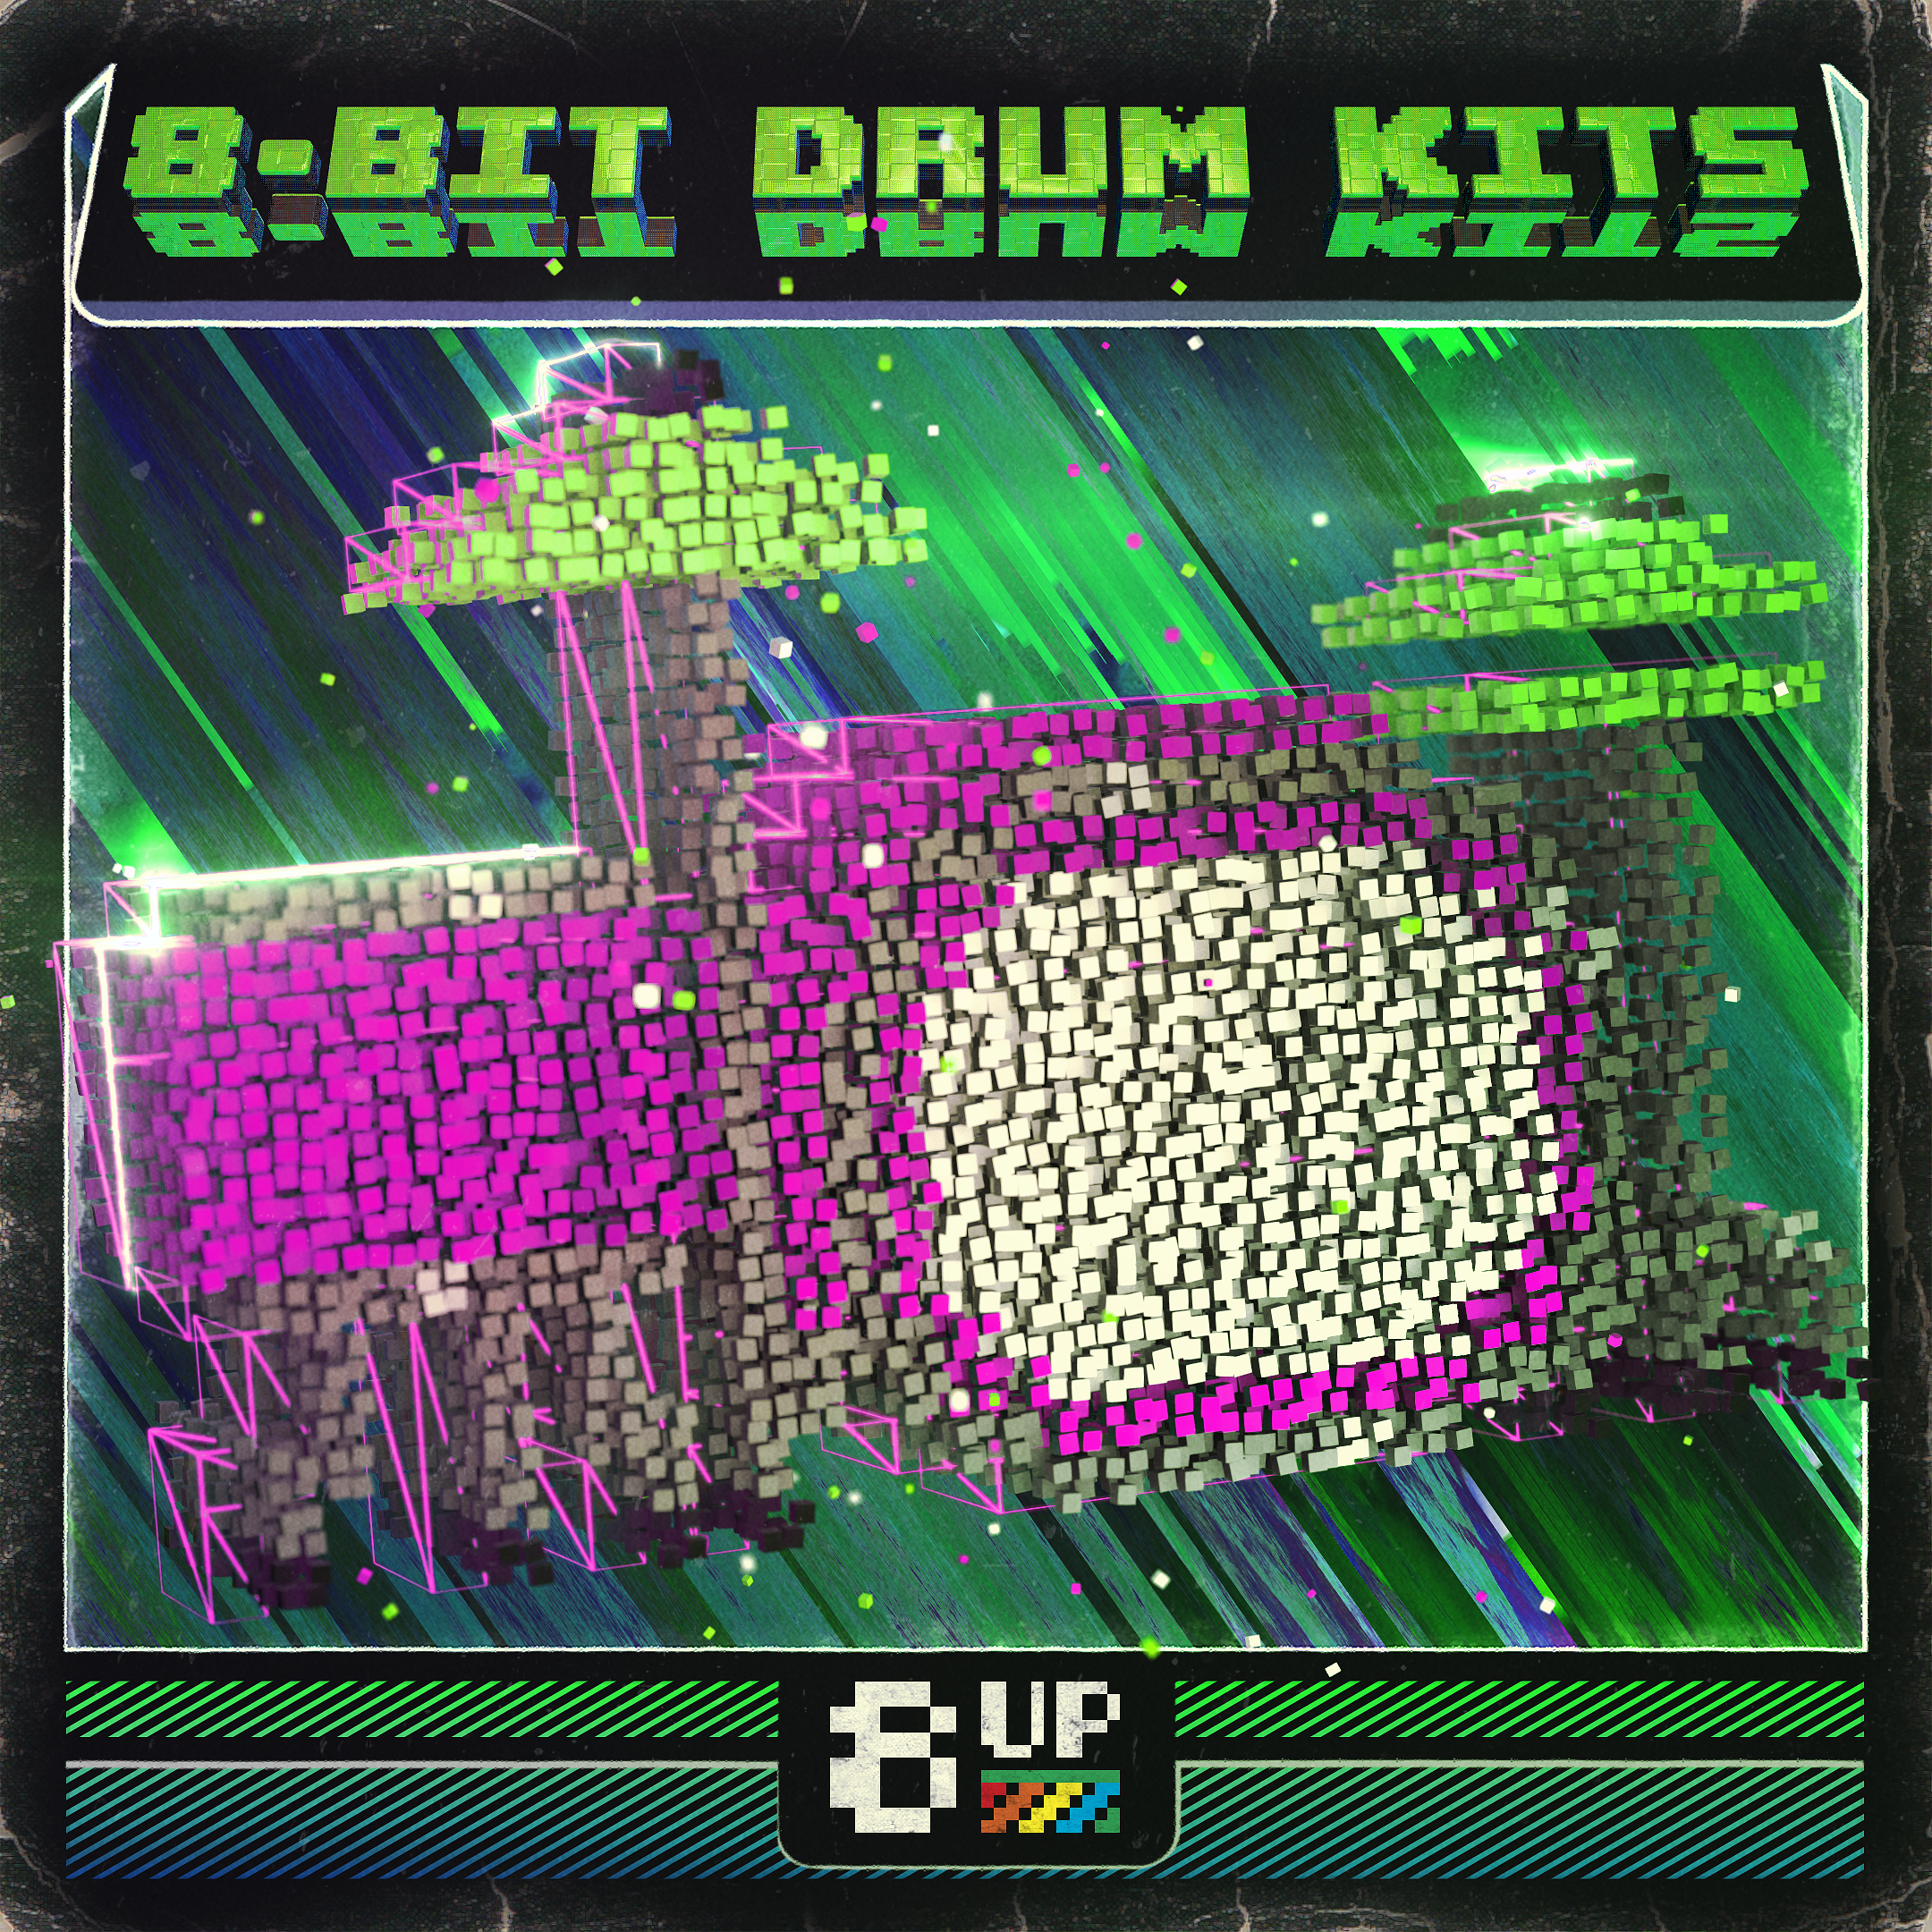 8-Bit Drum Kits Packshot by 8UP